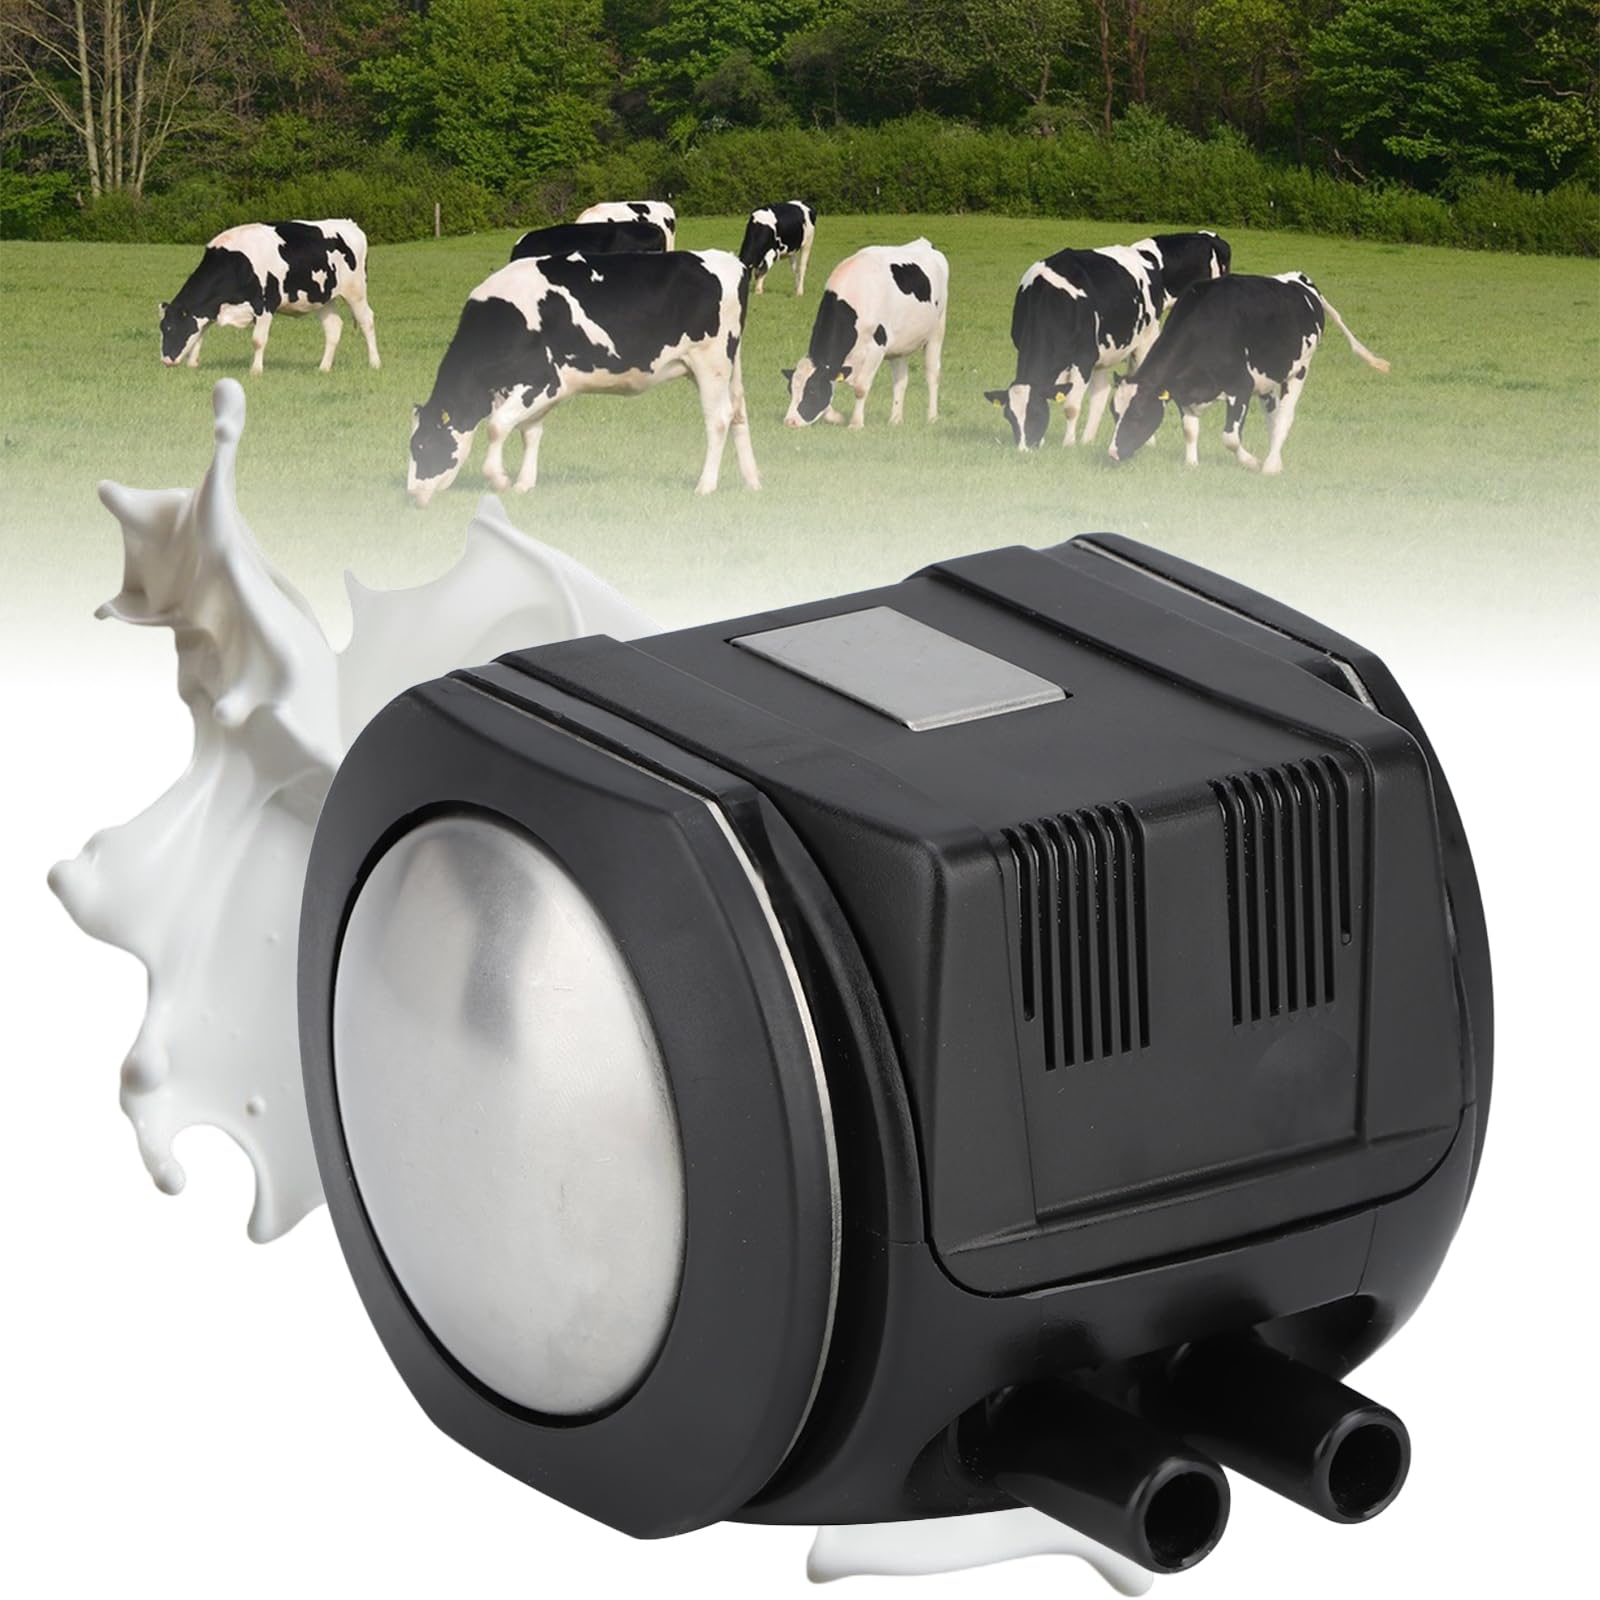 GAEHSOW Milking Pulsator Cow Spülmaschine, HP102 Melkpulsator Kuhmelker Melkmaschinenzubehör Landmaschinen mit Zwei Ausgängen, Melkmaschinenpulsator für Kuhschafmelker